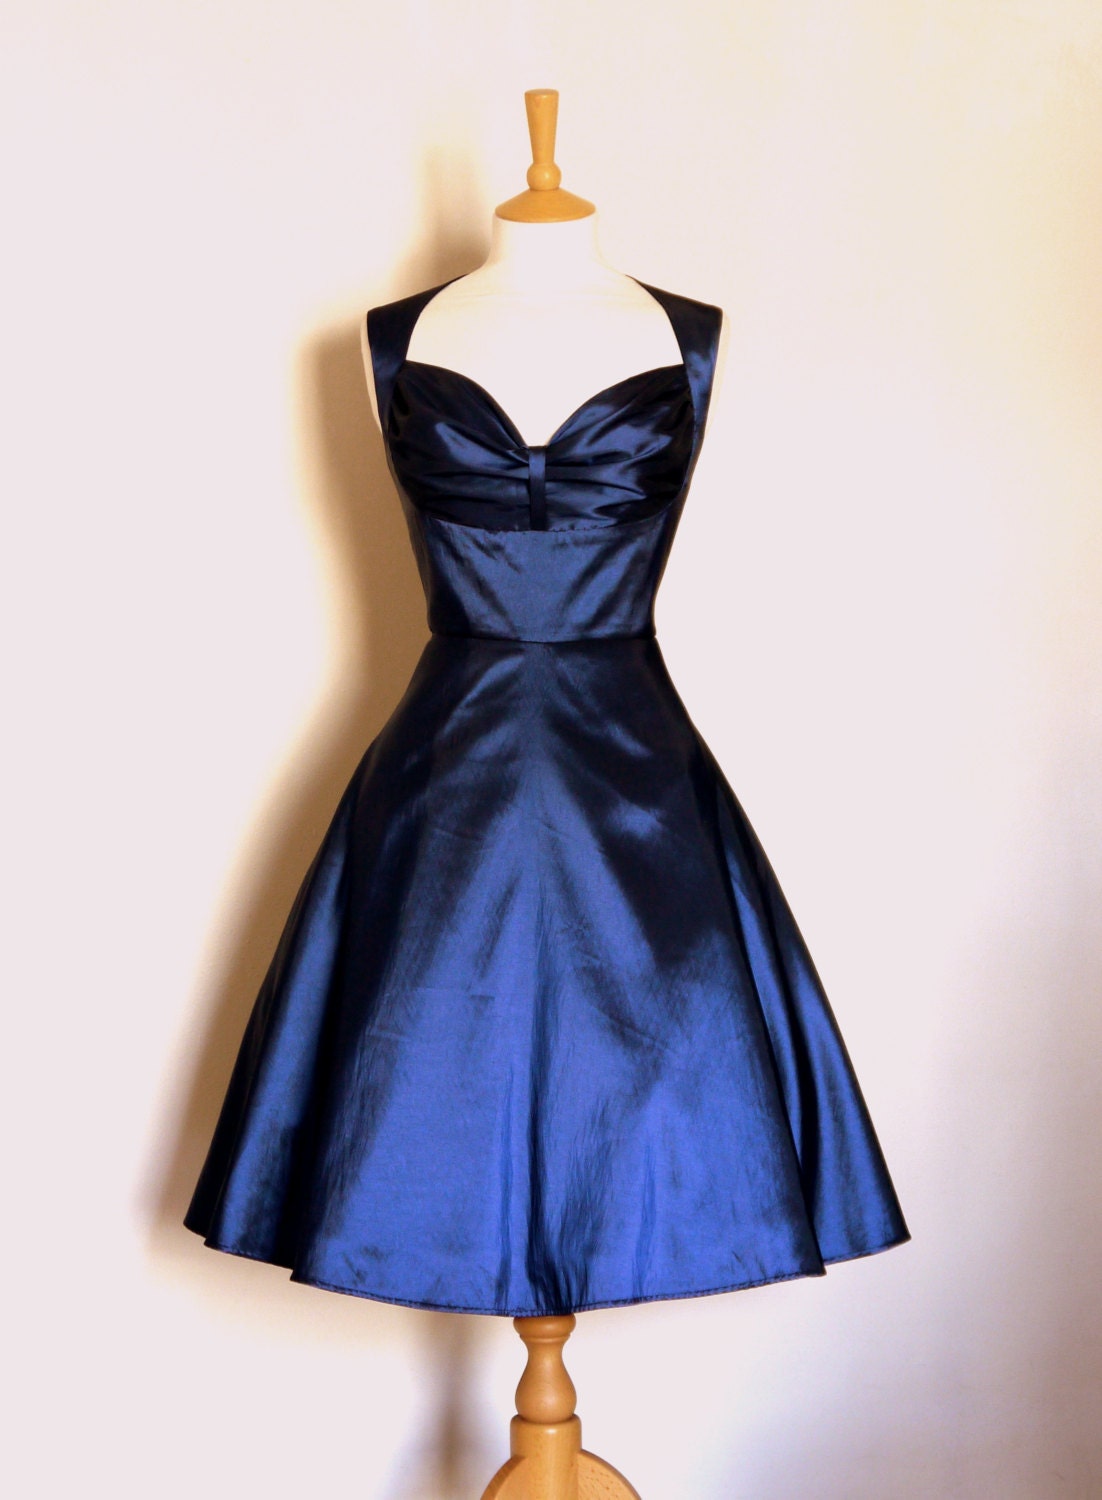 Midnight Blue Taffeta Bustier Evening Dress made by digforvictory